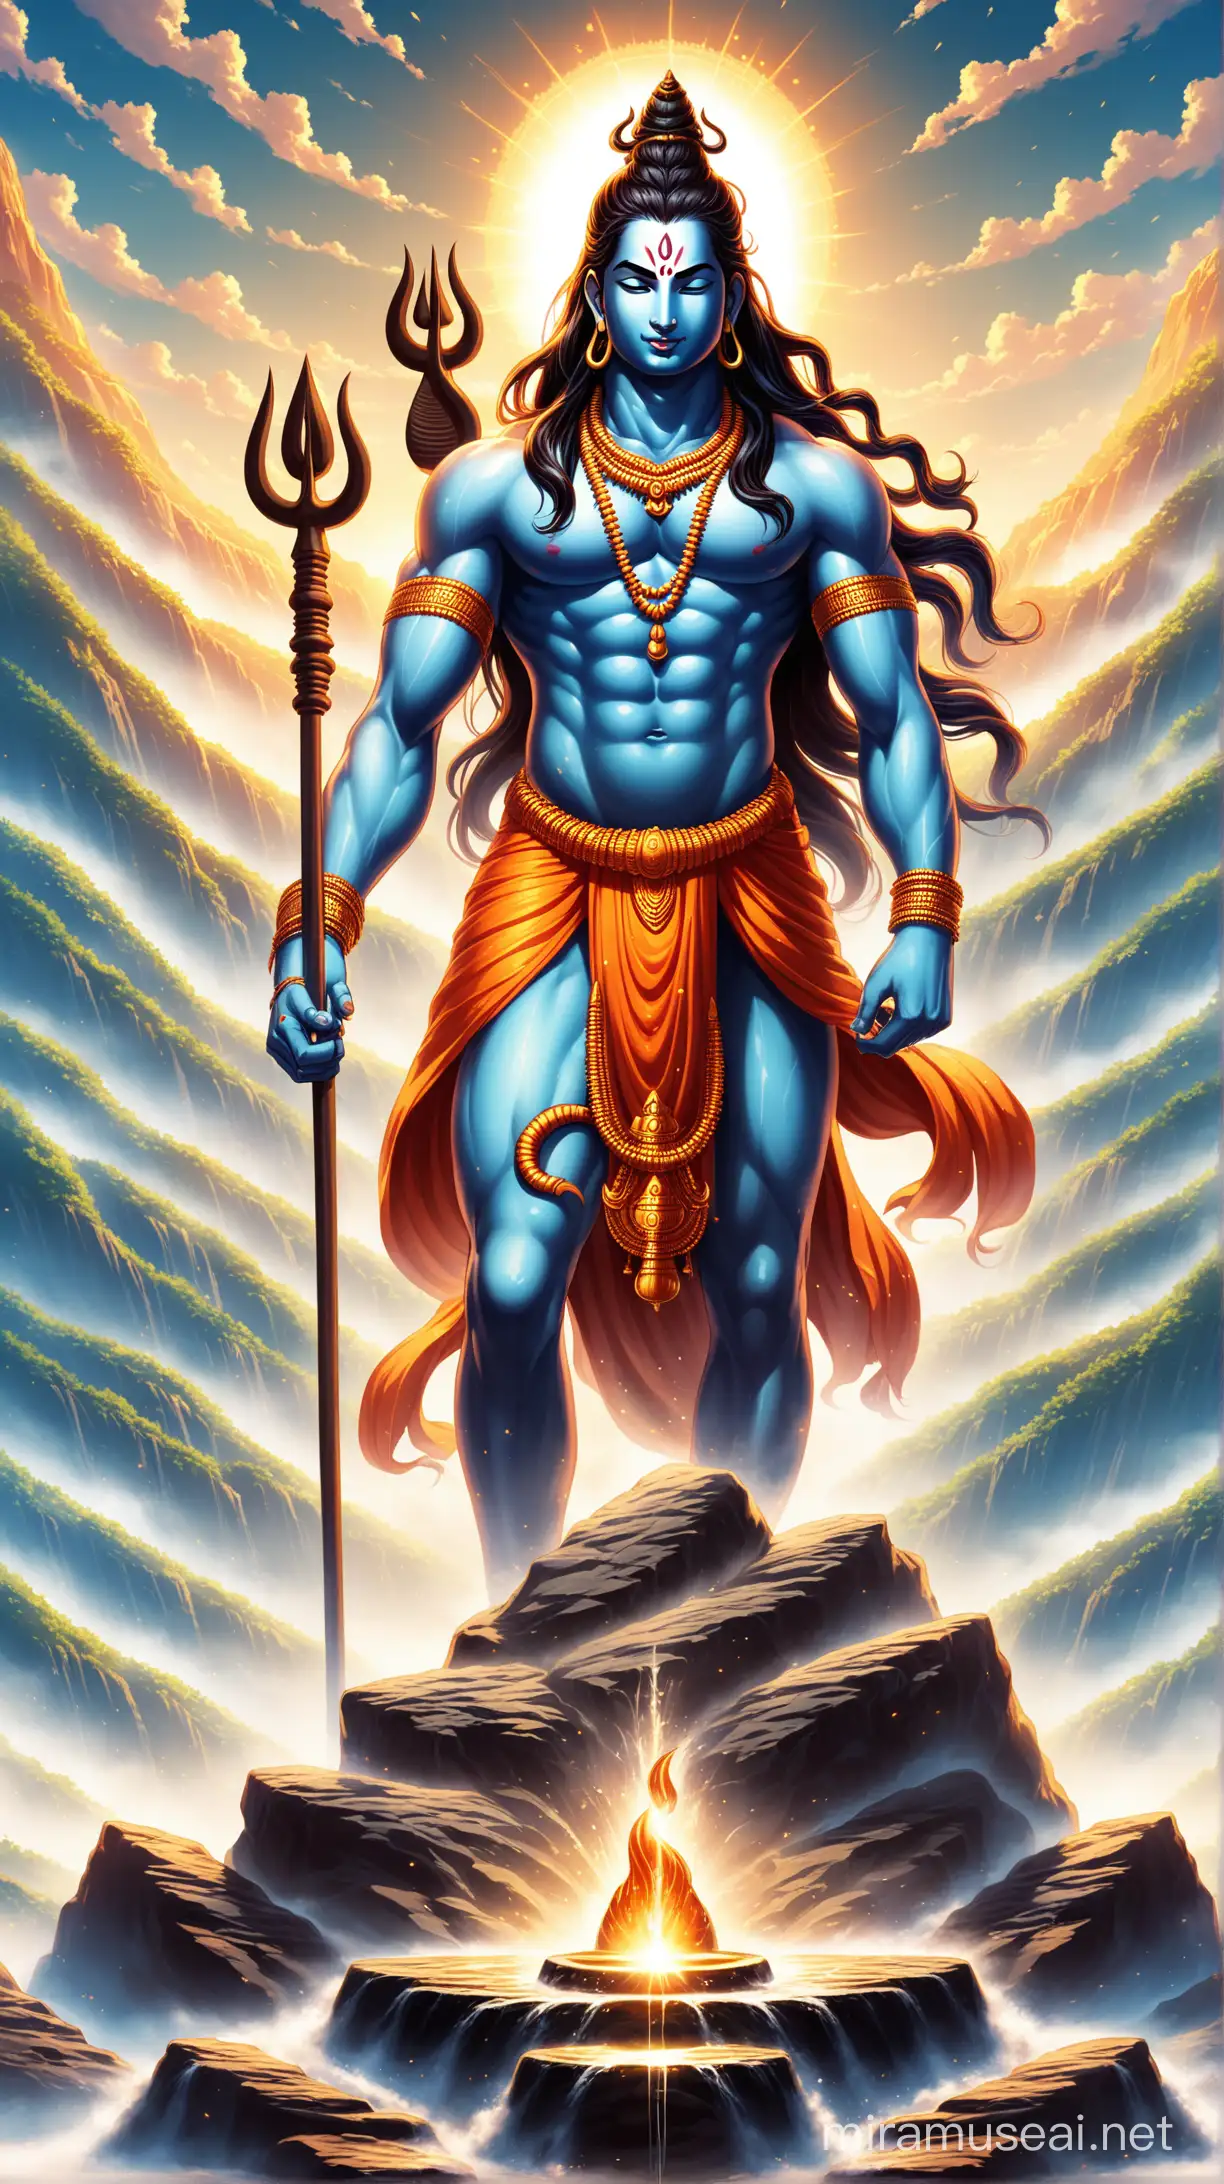 Majestic Lord Shiva Supreme Deity of Destruction